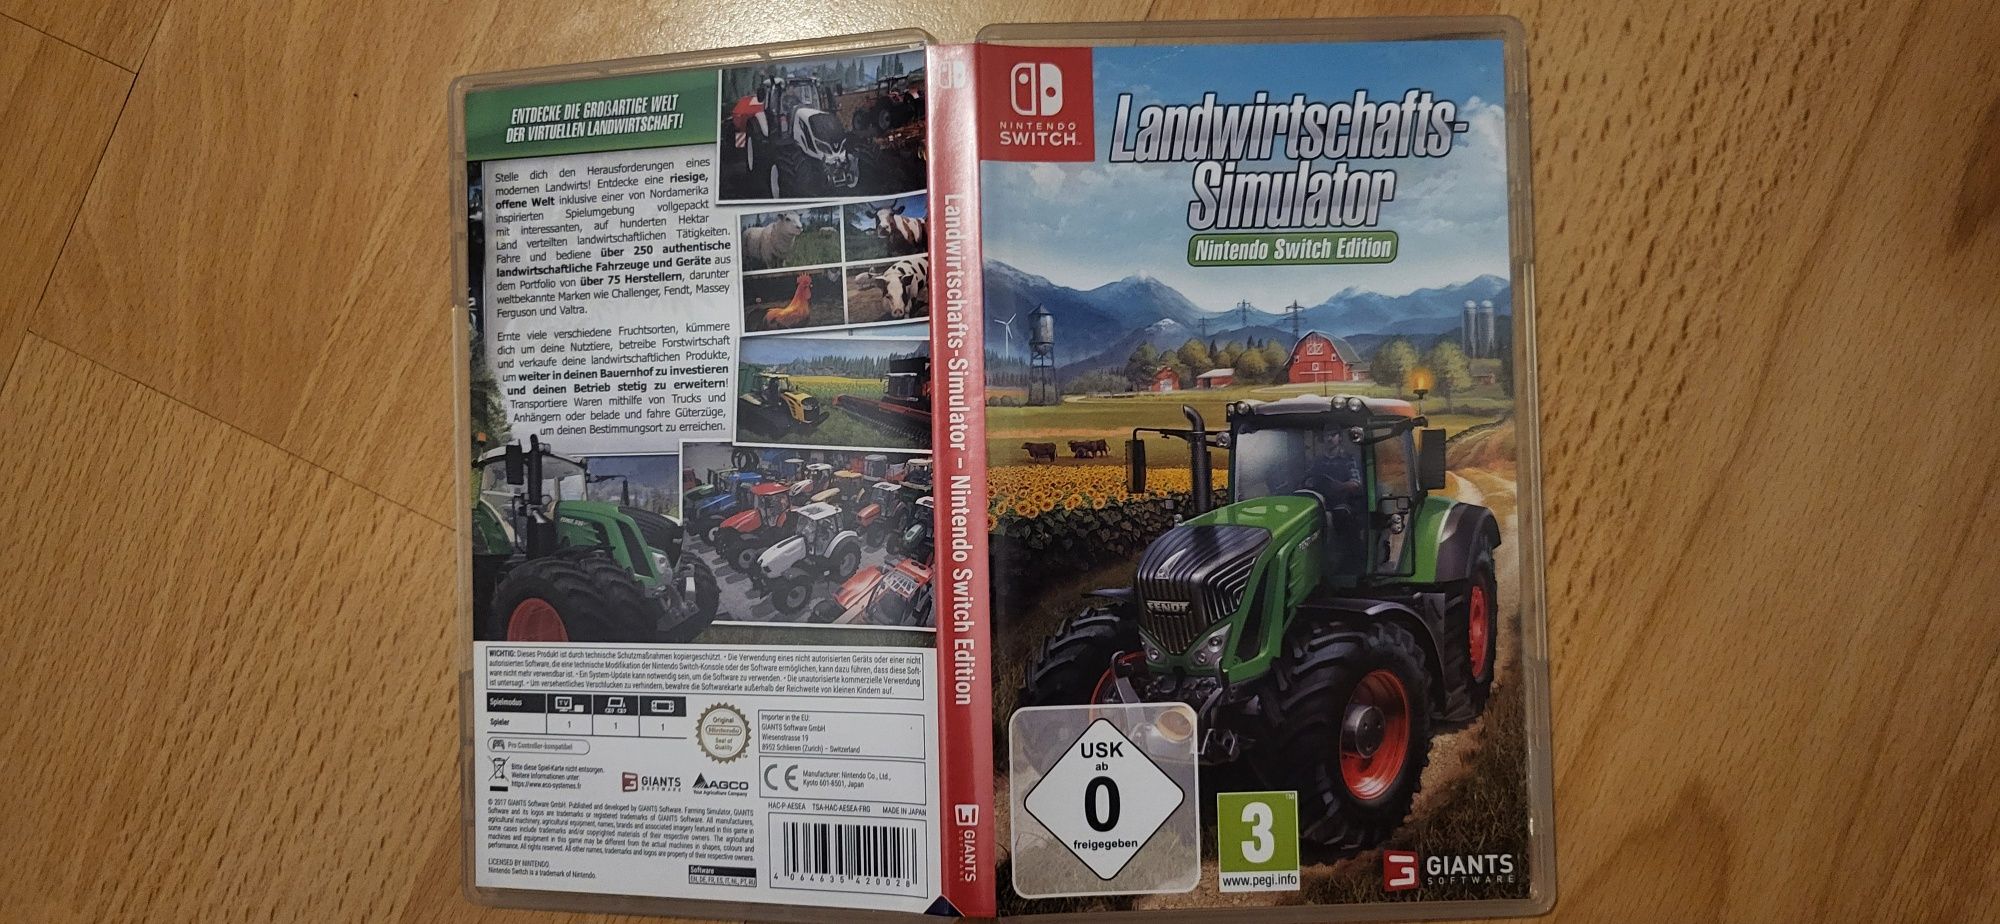 Farming simulator nintendo switch edition